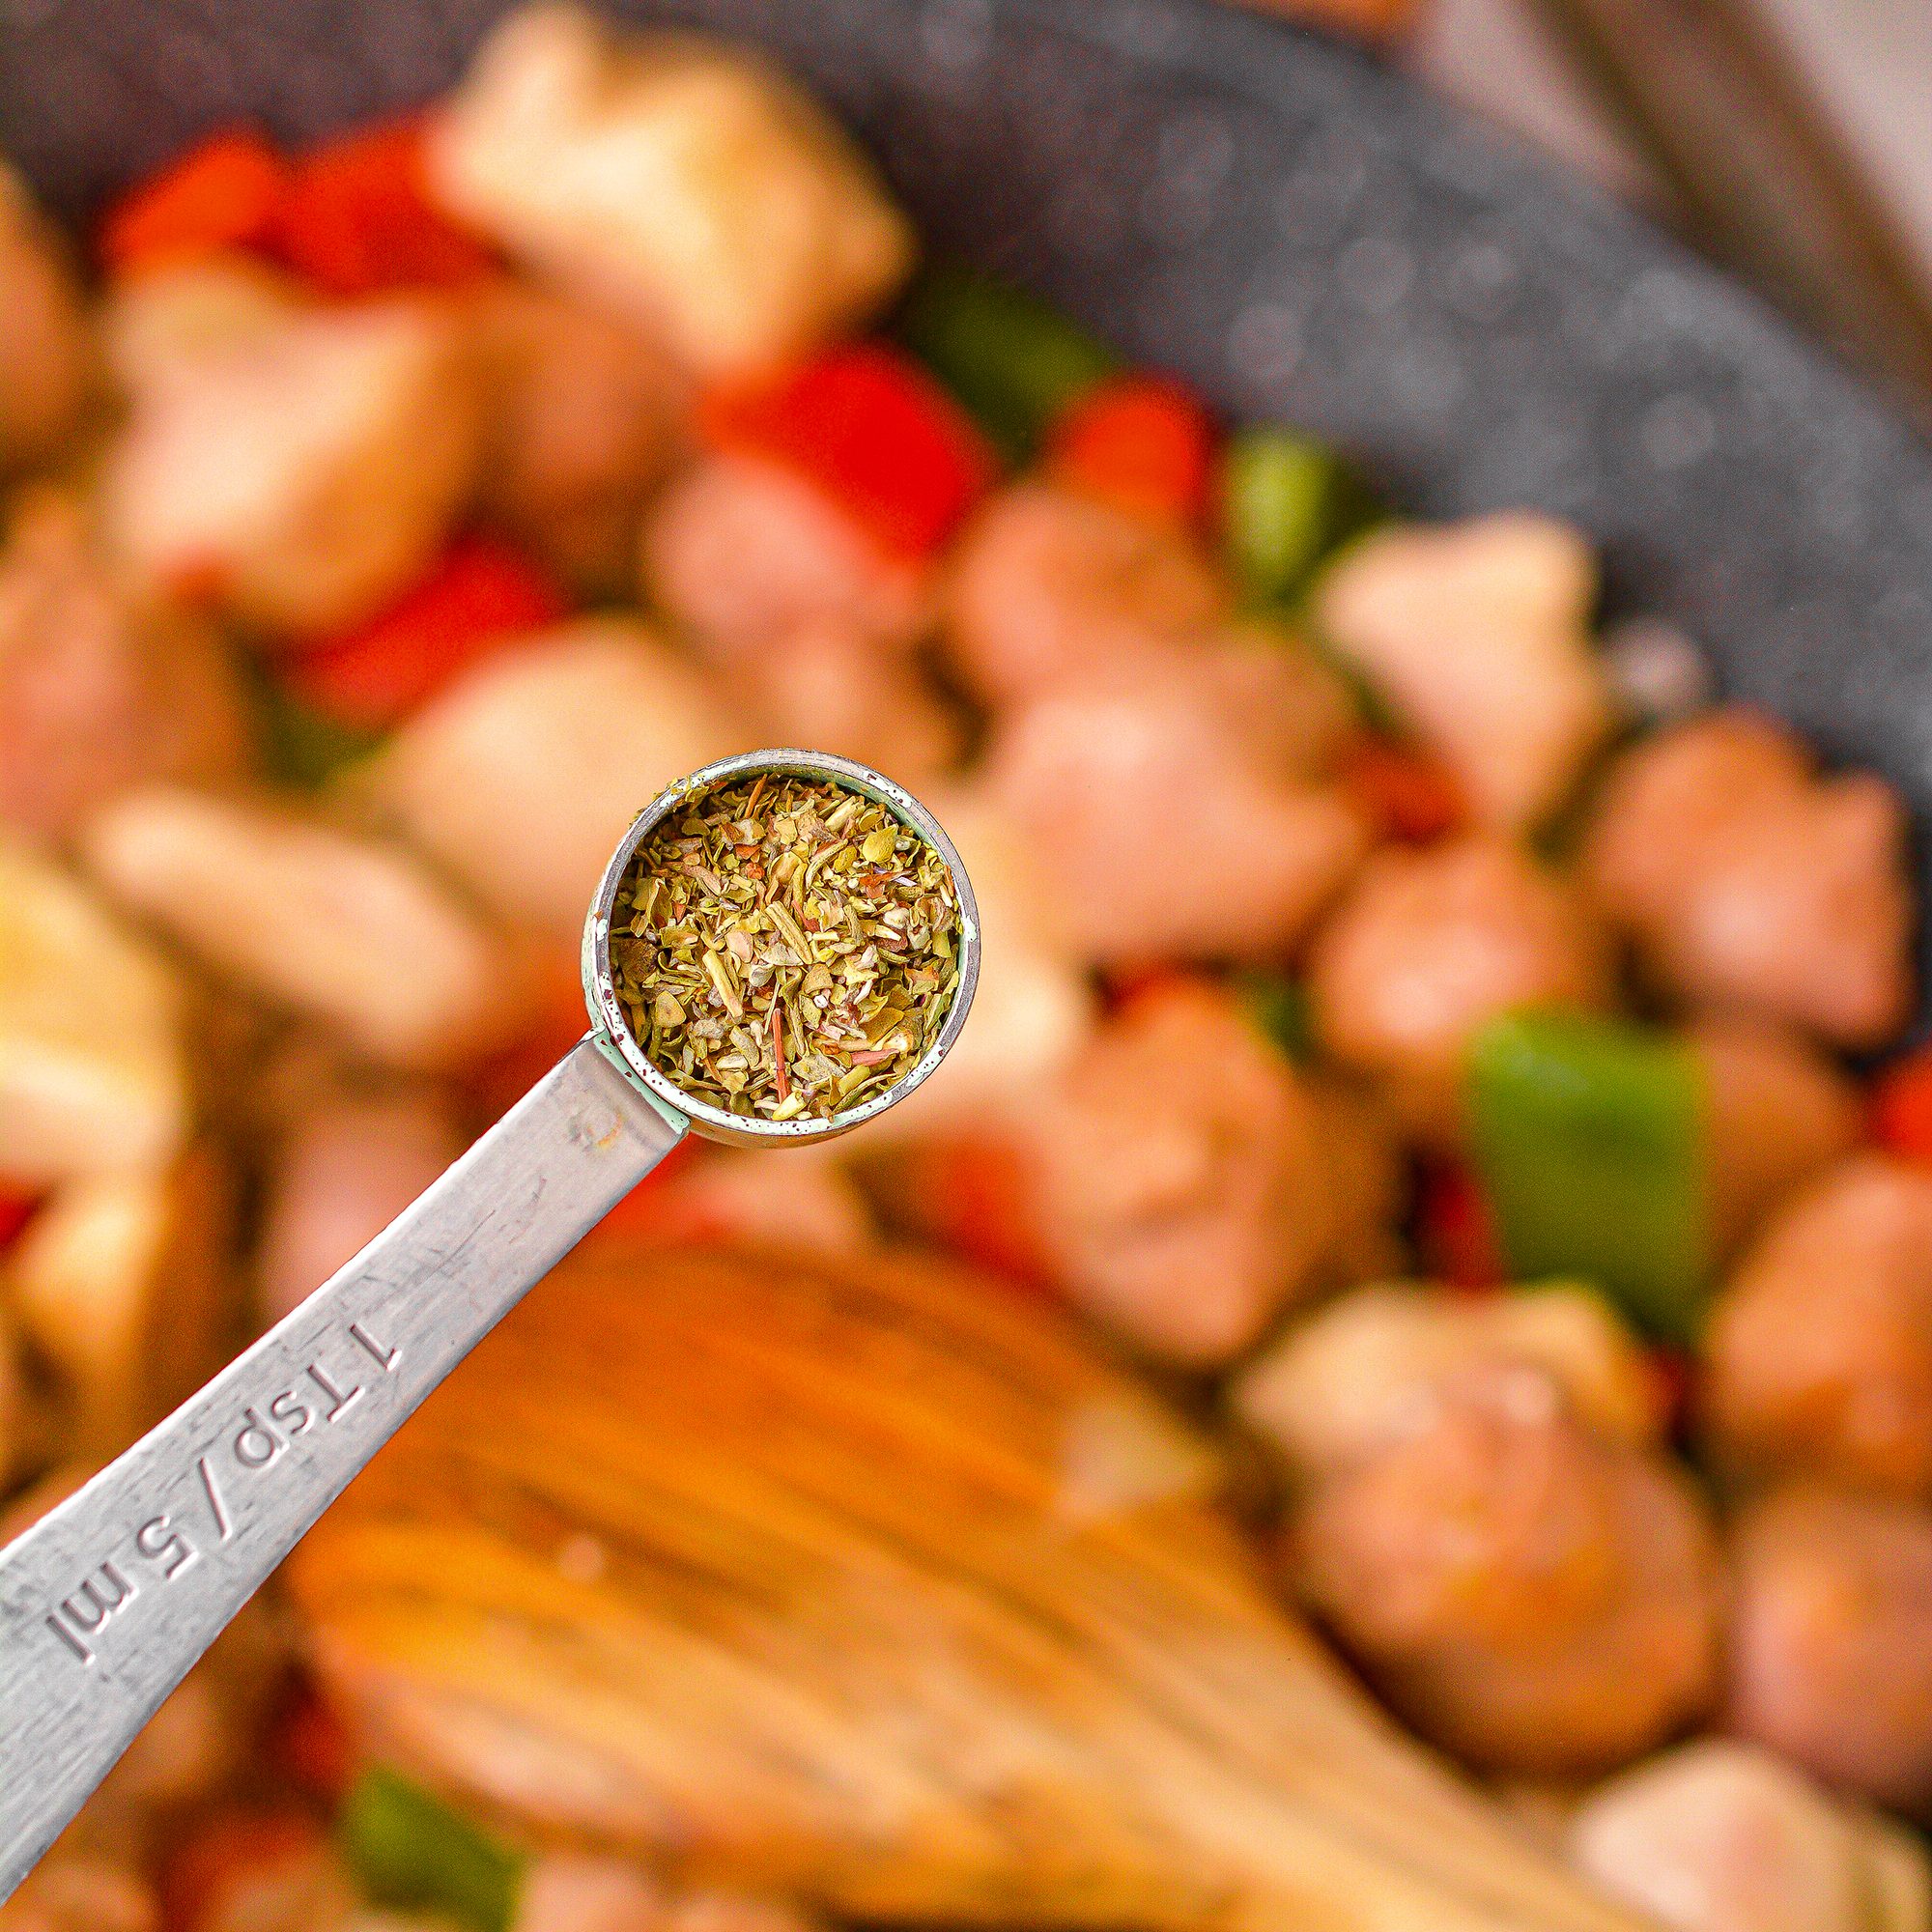 Stir in the Italian seasoning and salt and pepper to taste.